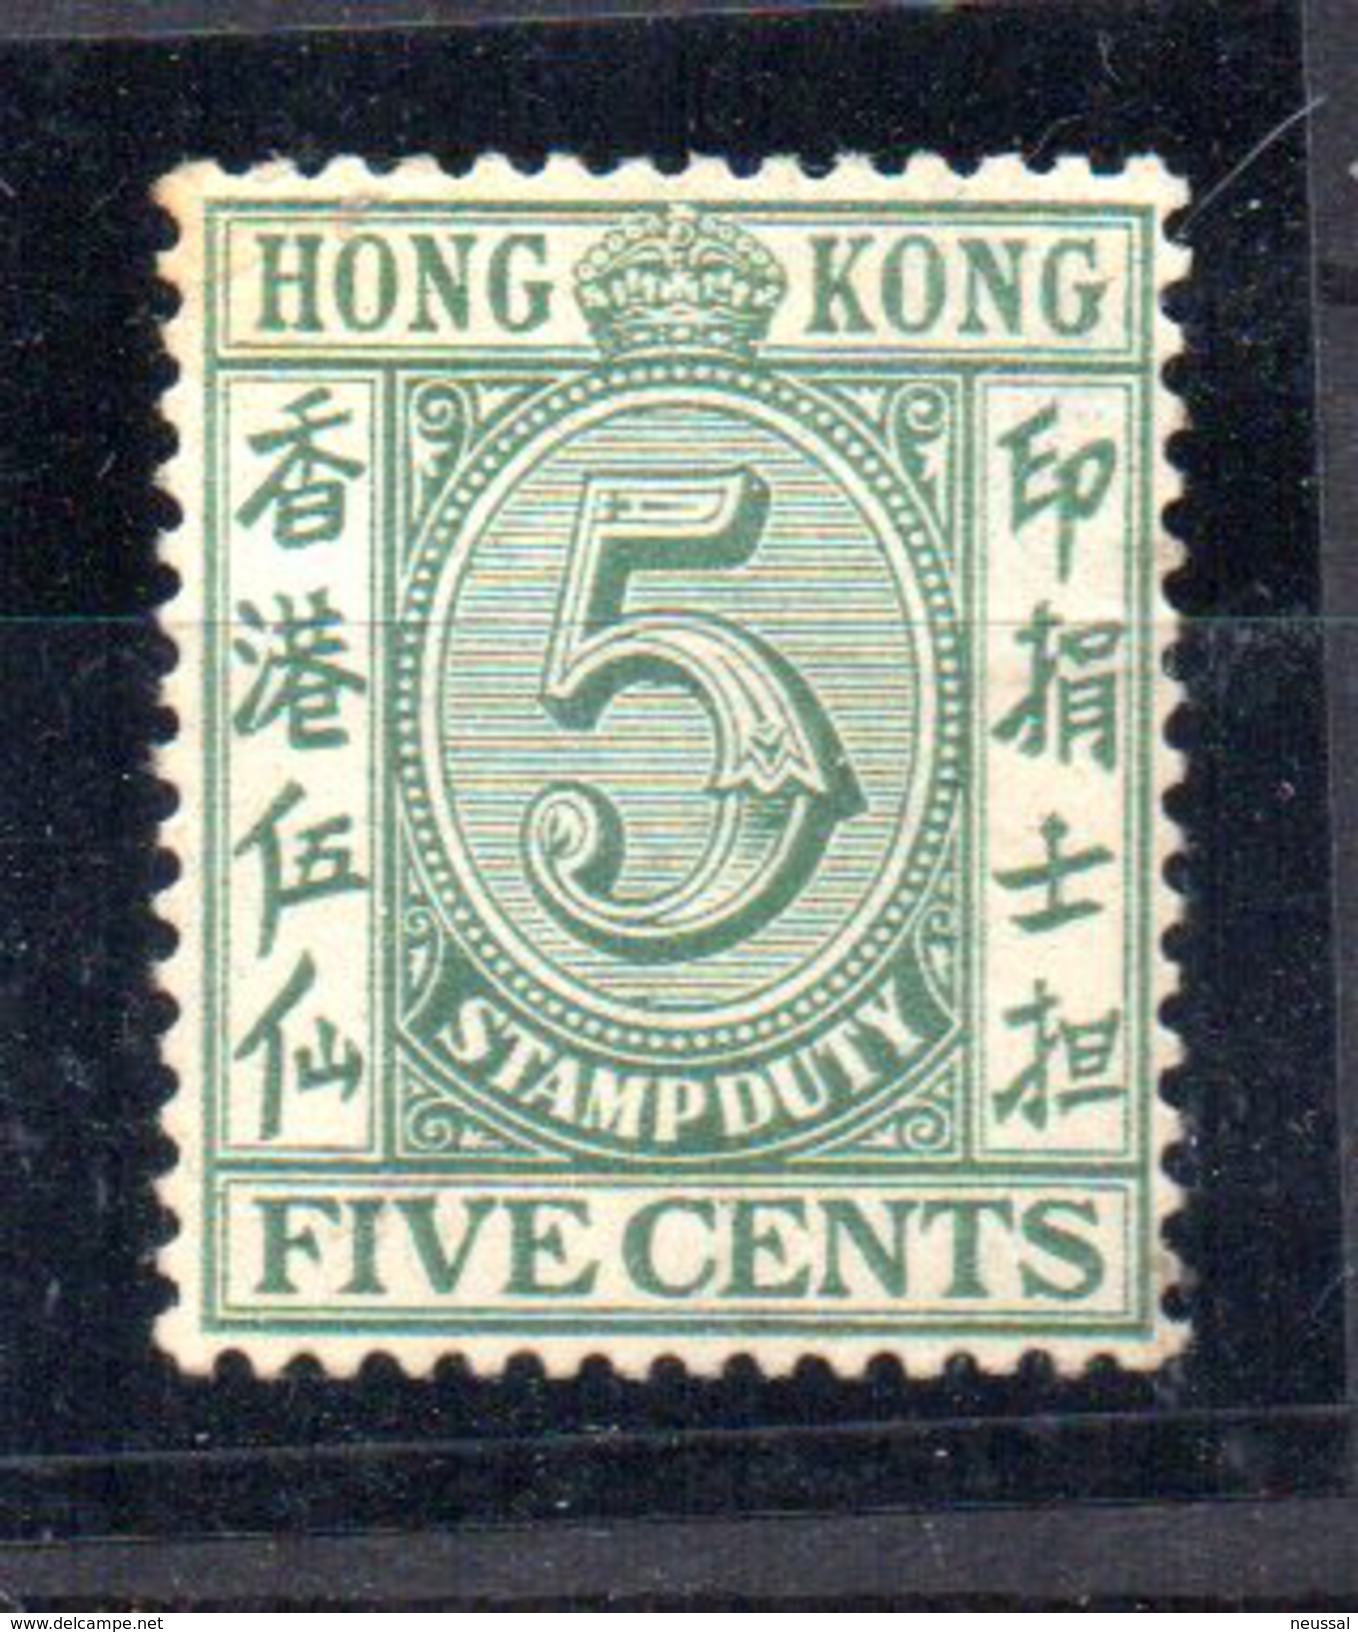 Sello Franquicia Postal Nº 15 Hong Kong. - Postal Fiscal Stamps